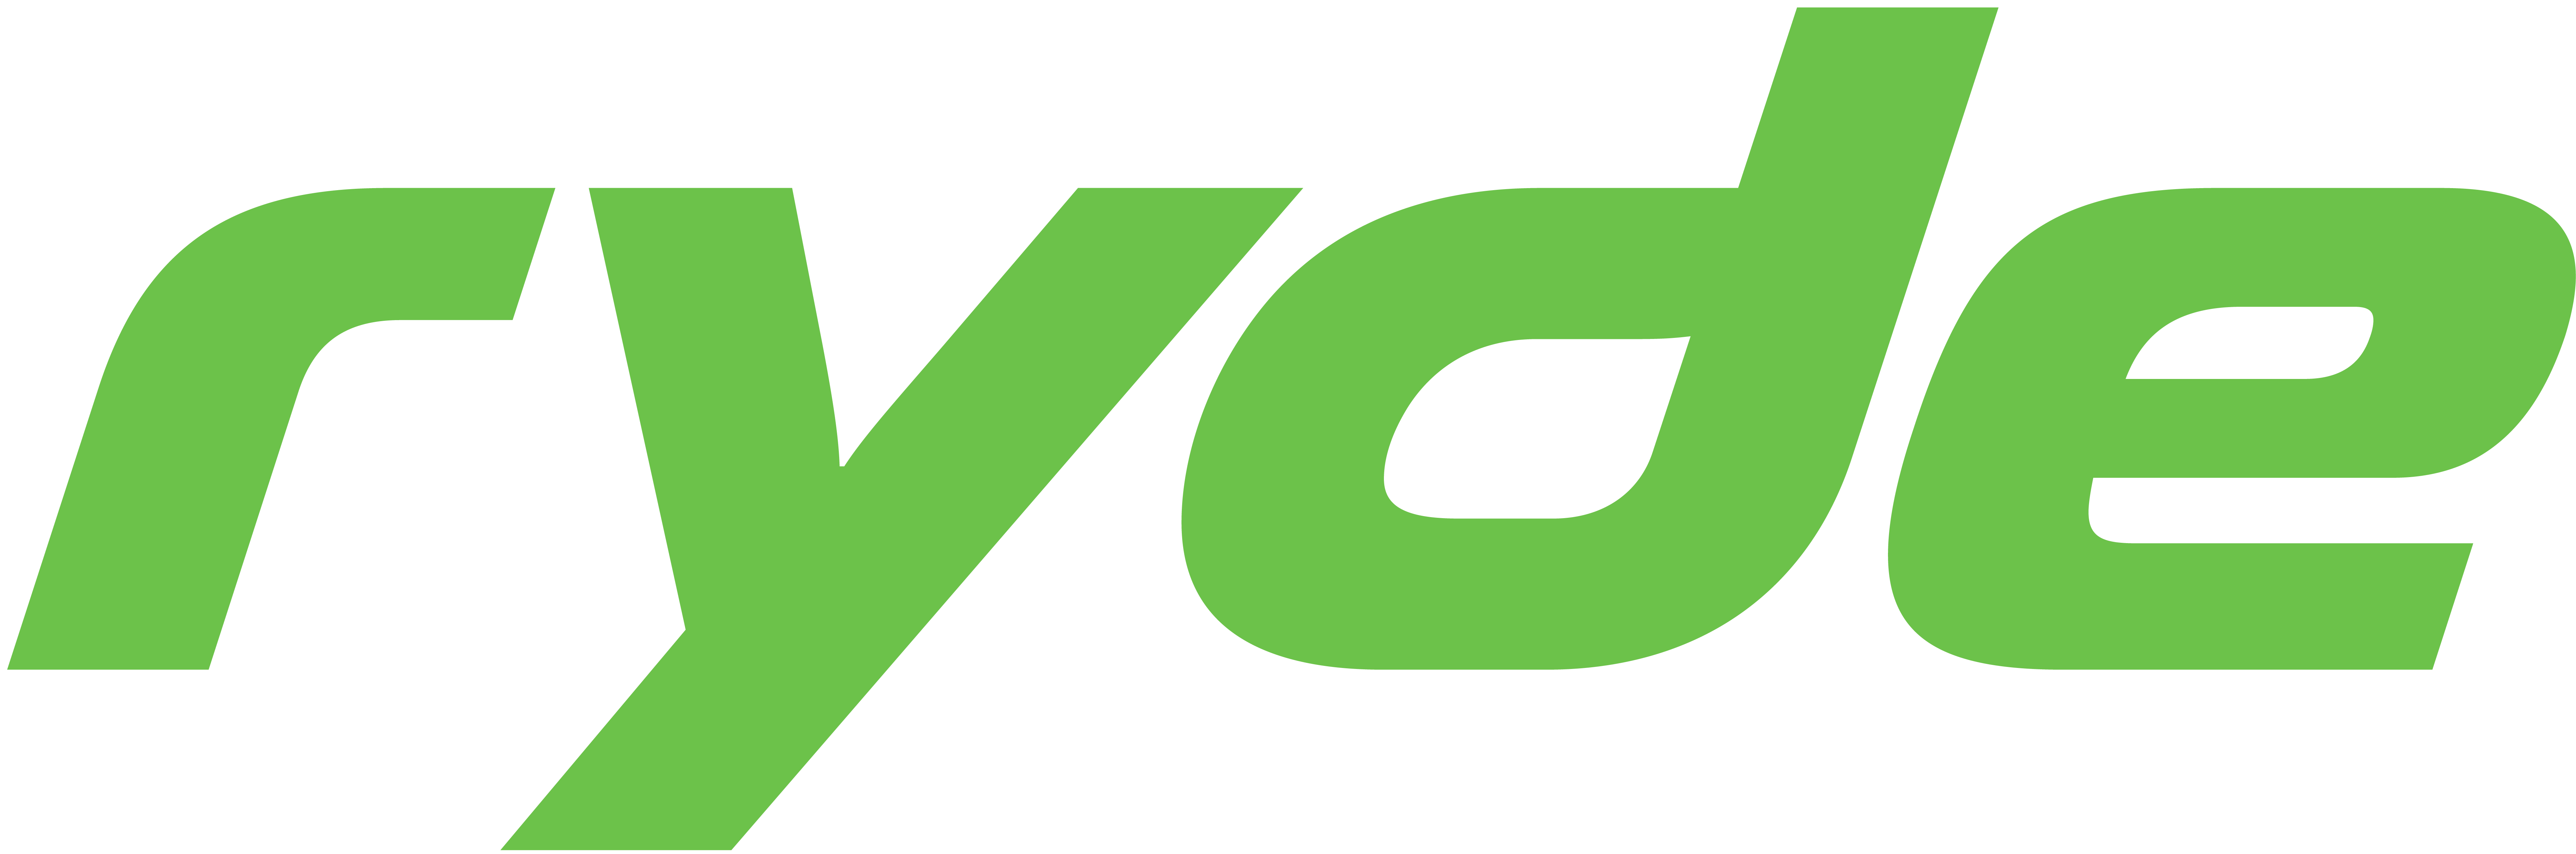 Ryde logo